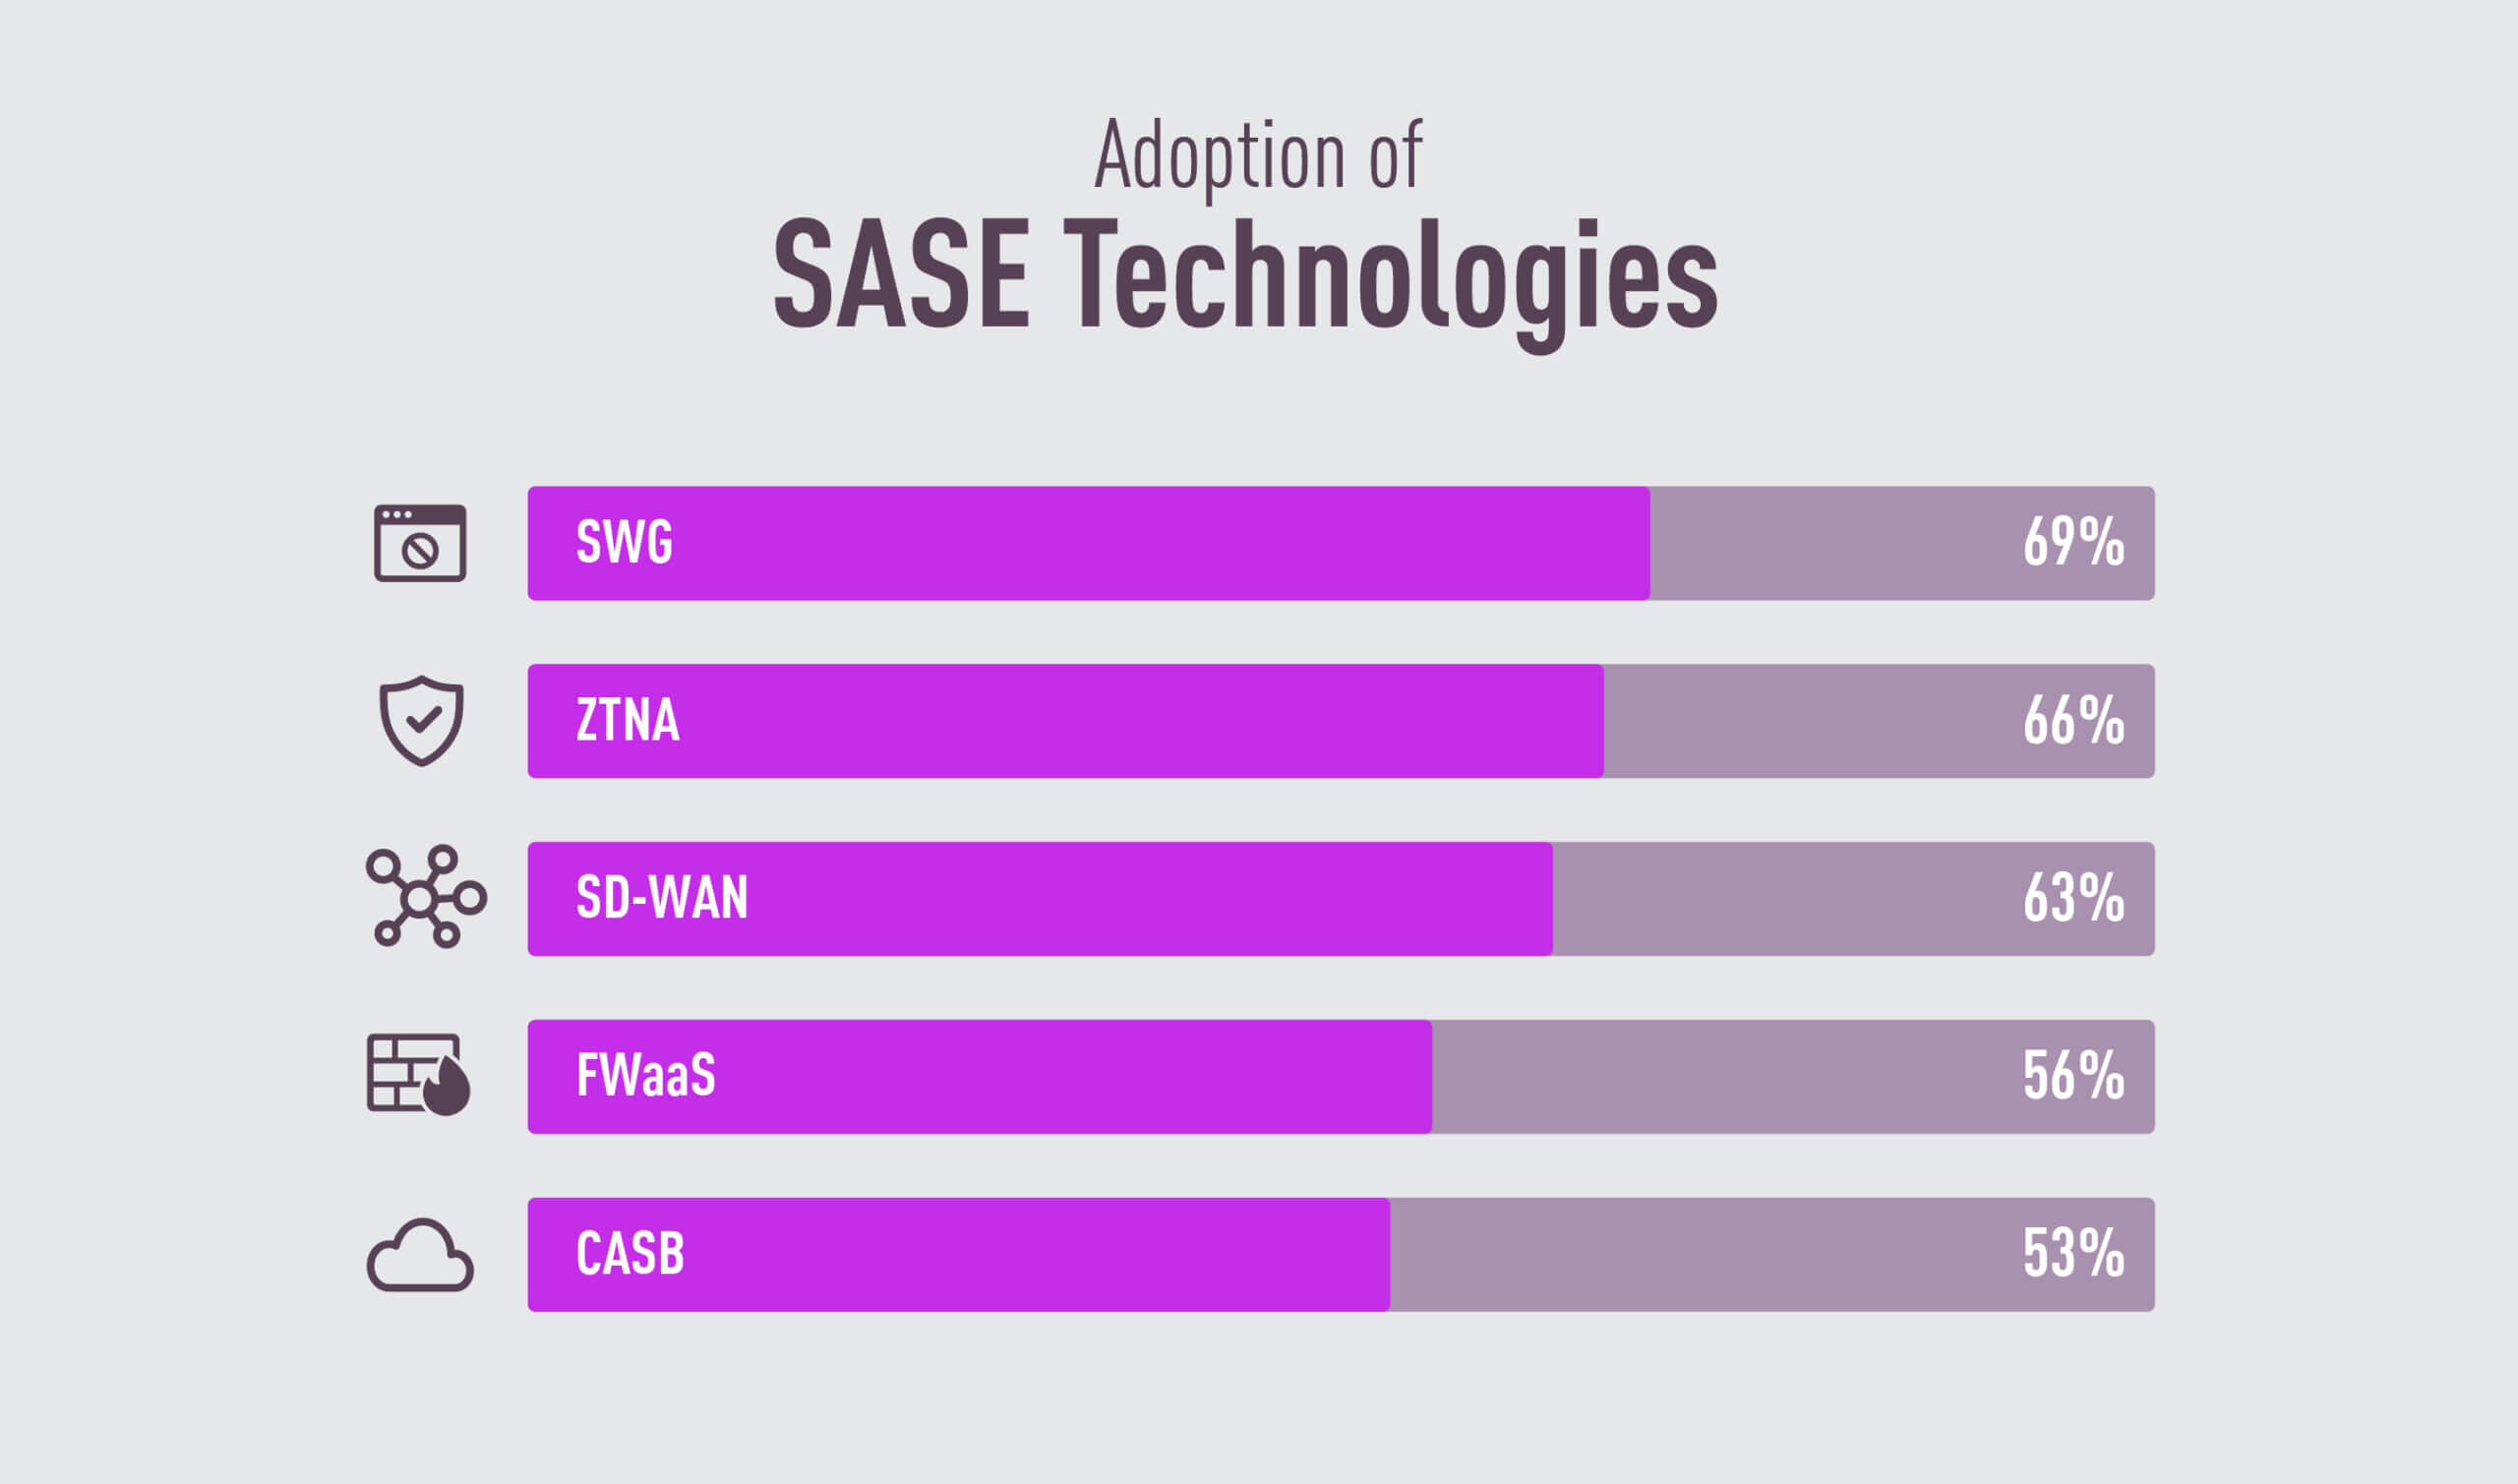 SASE Technologies